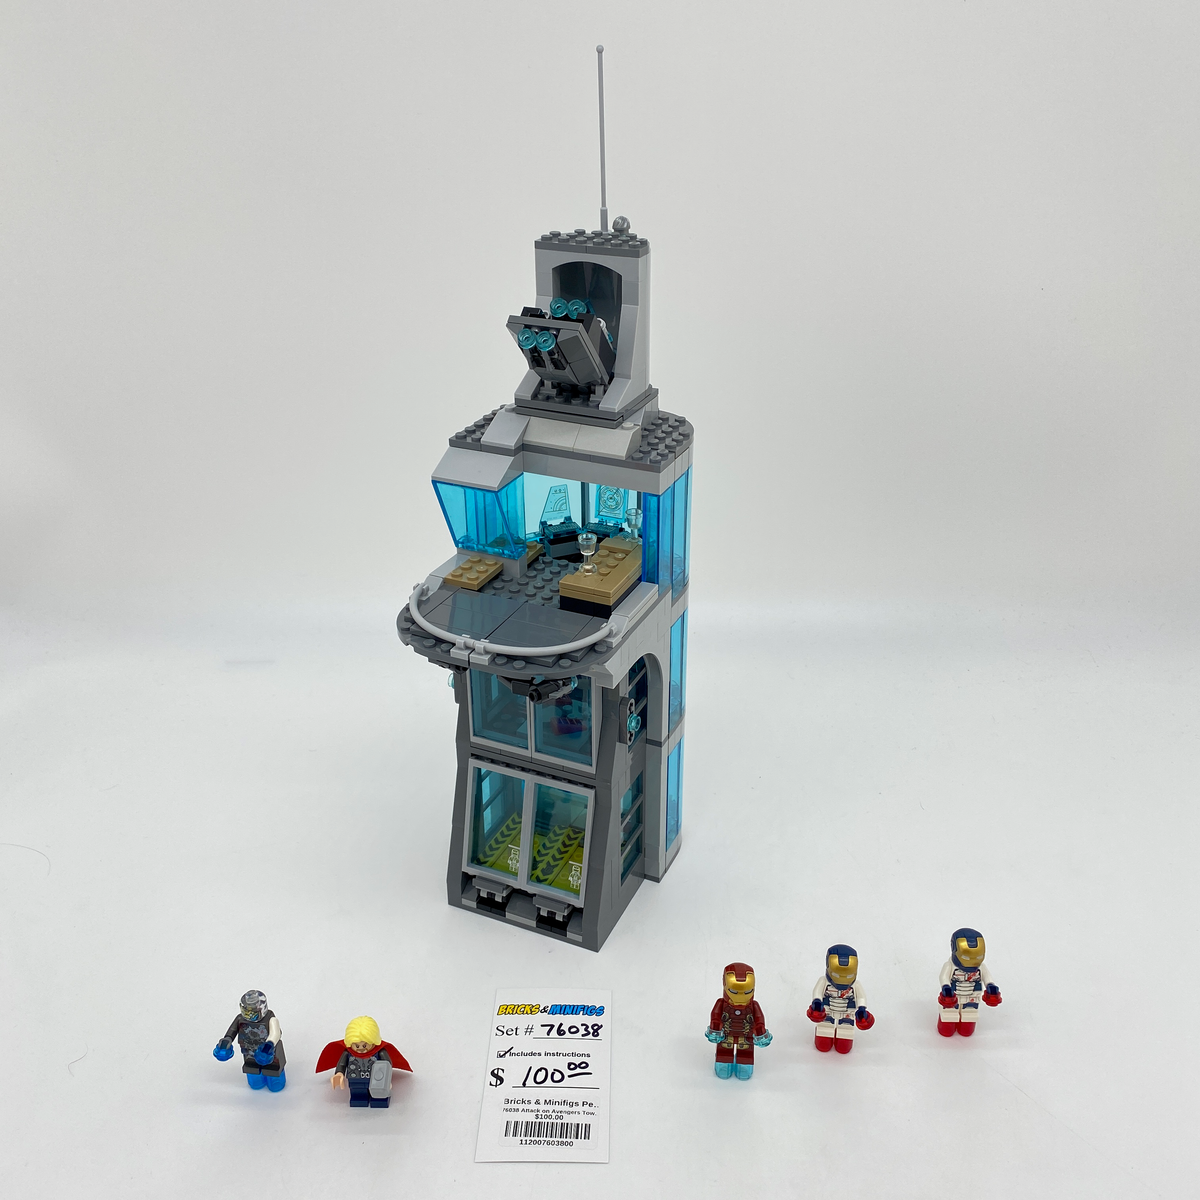 LEGO 76038 - Marvel Superheroes - Attack on Avengers Tower - STICKER SHEET